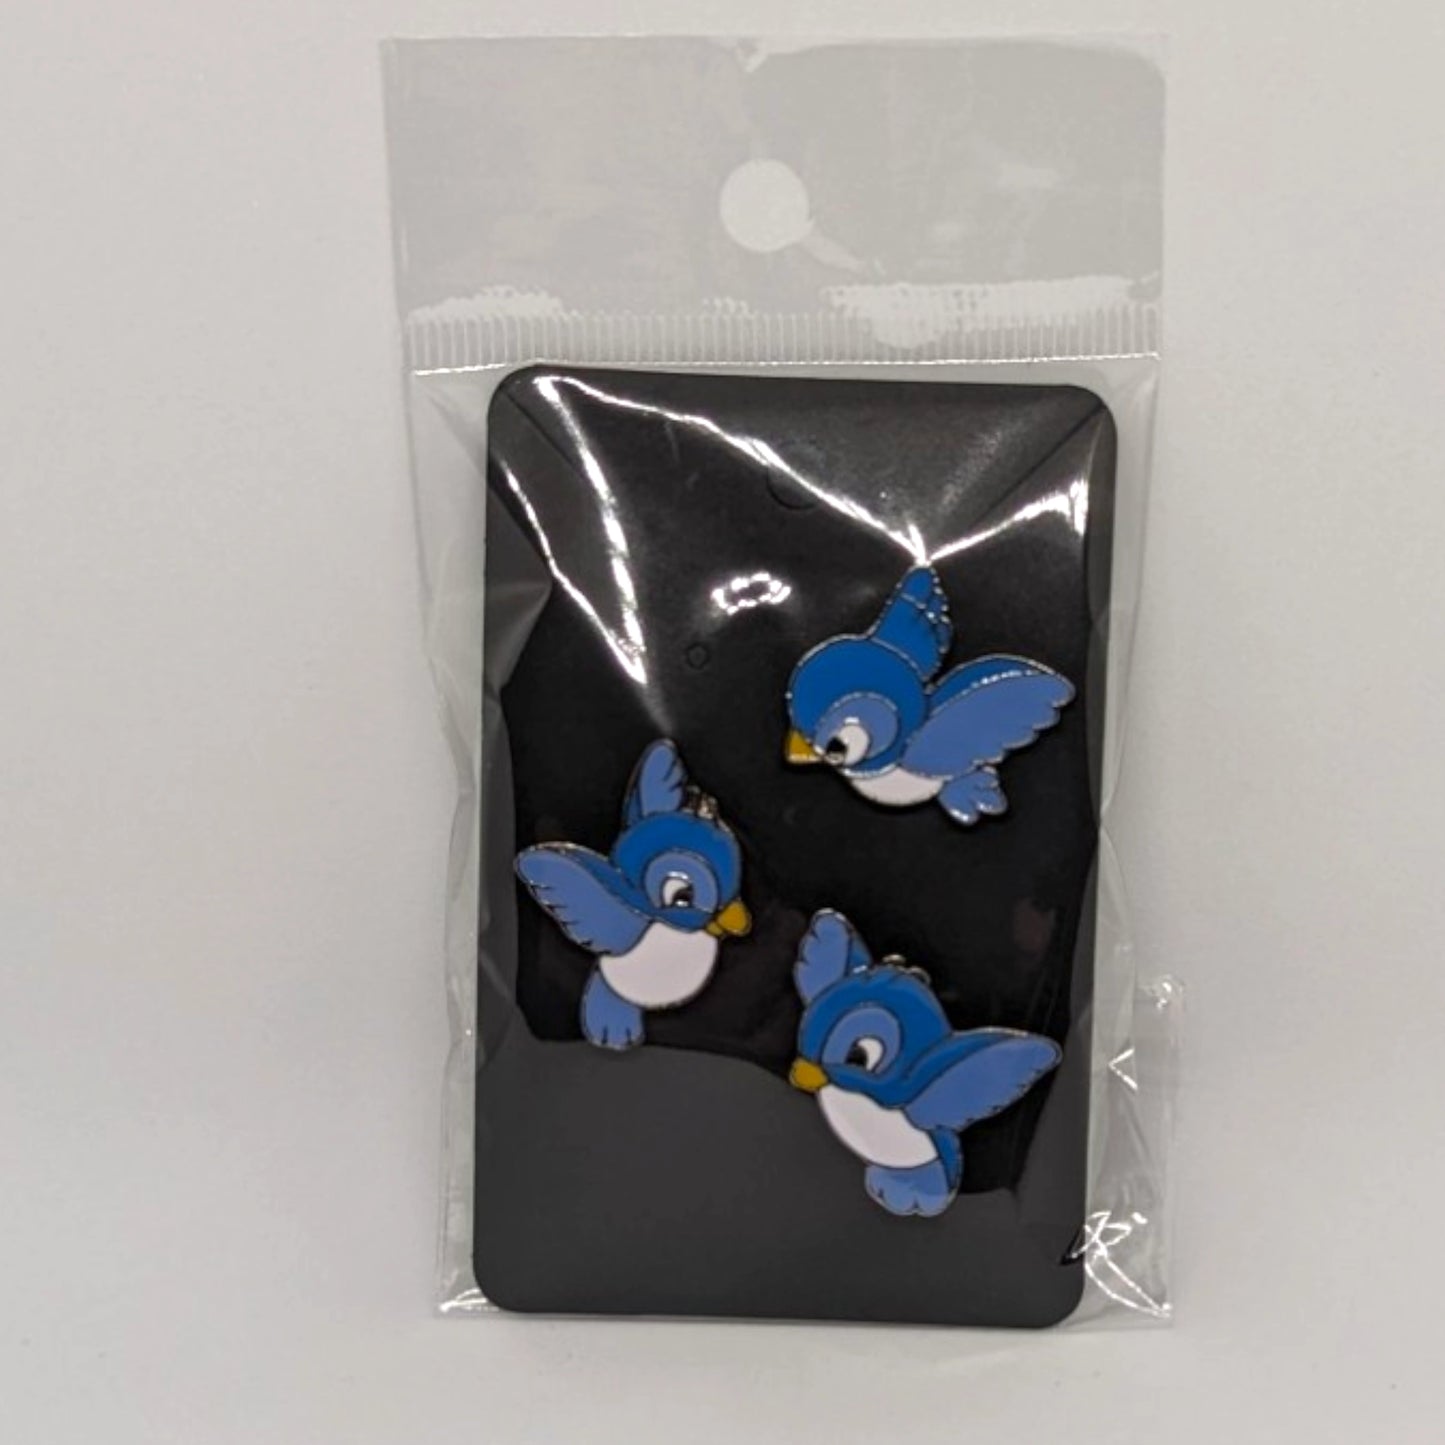 Fairy tail birds enamel pins - 3 pack #104